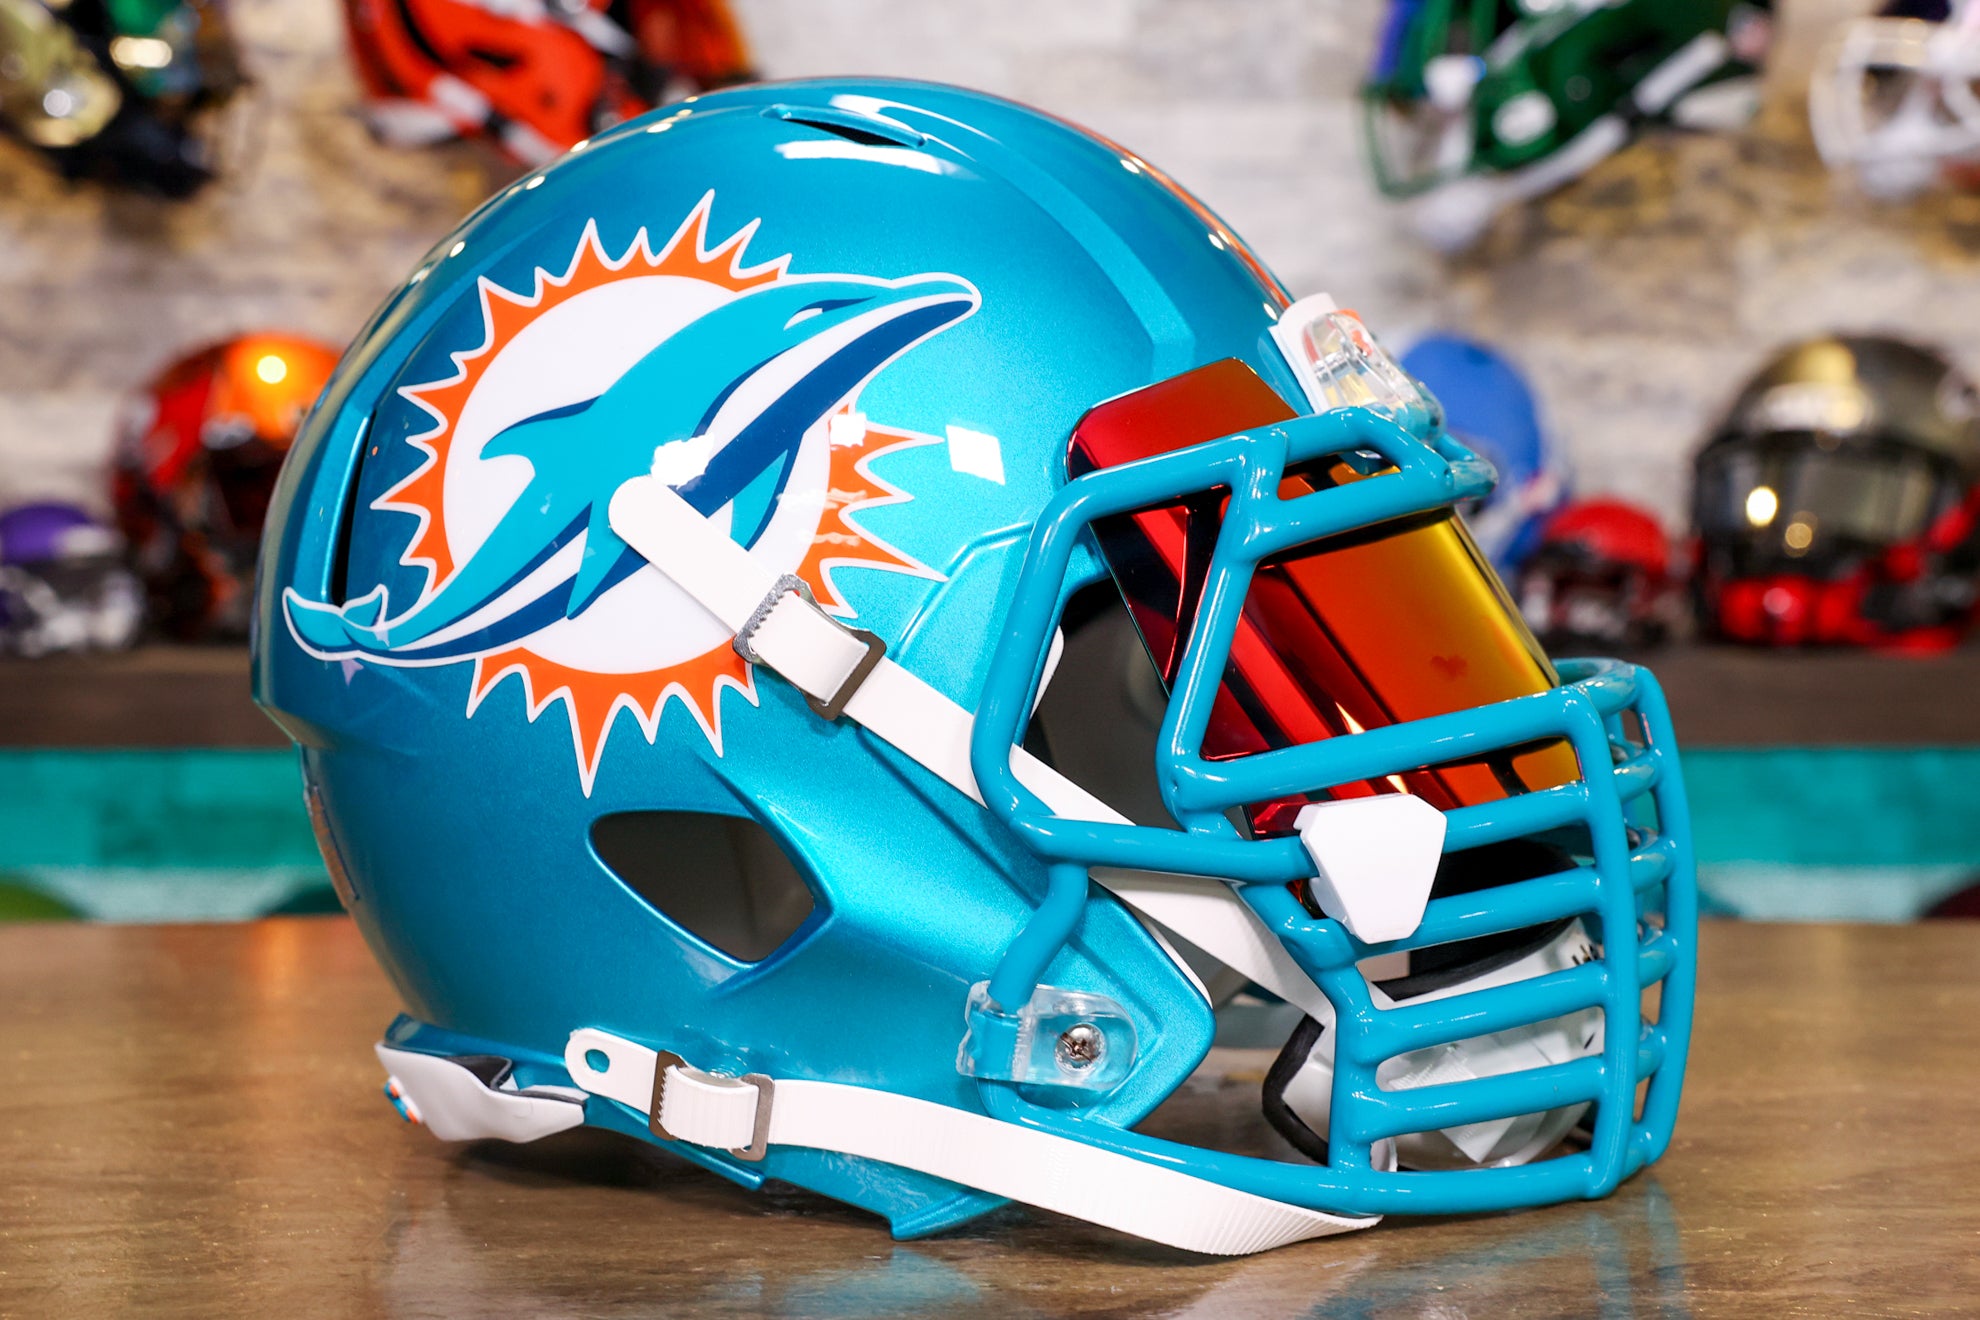 Miami Hurricanes reveal new jersey, helmet design